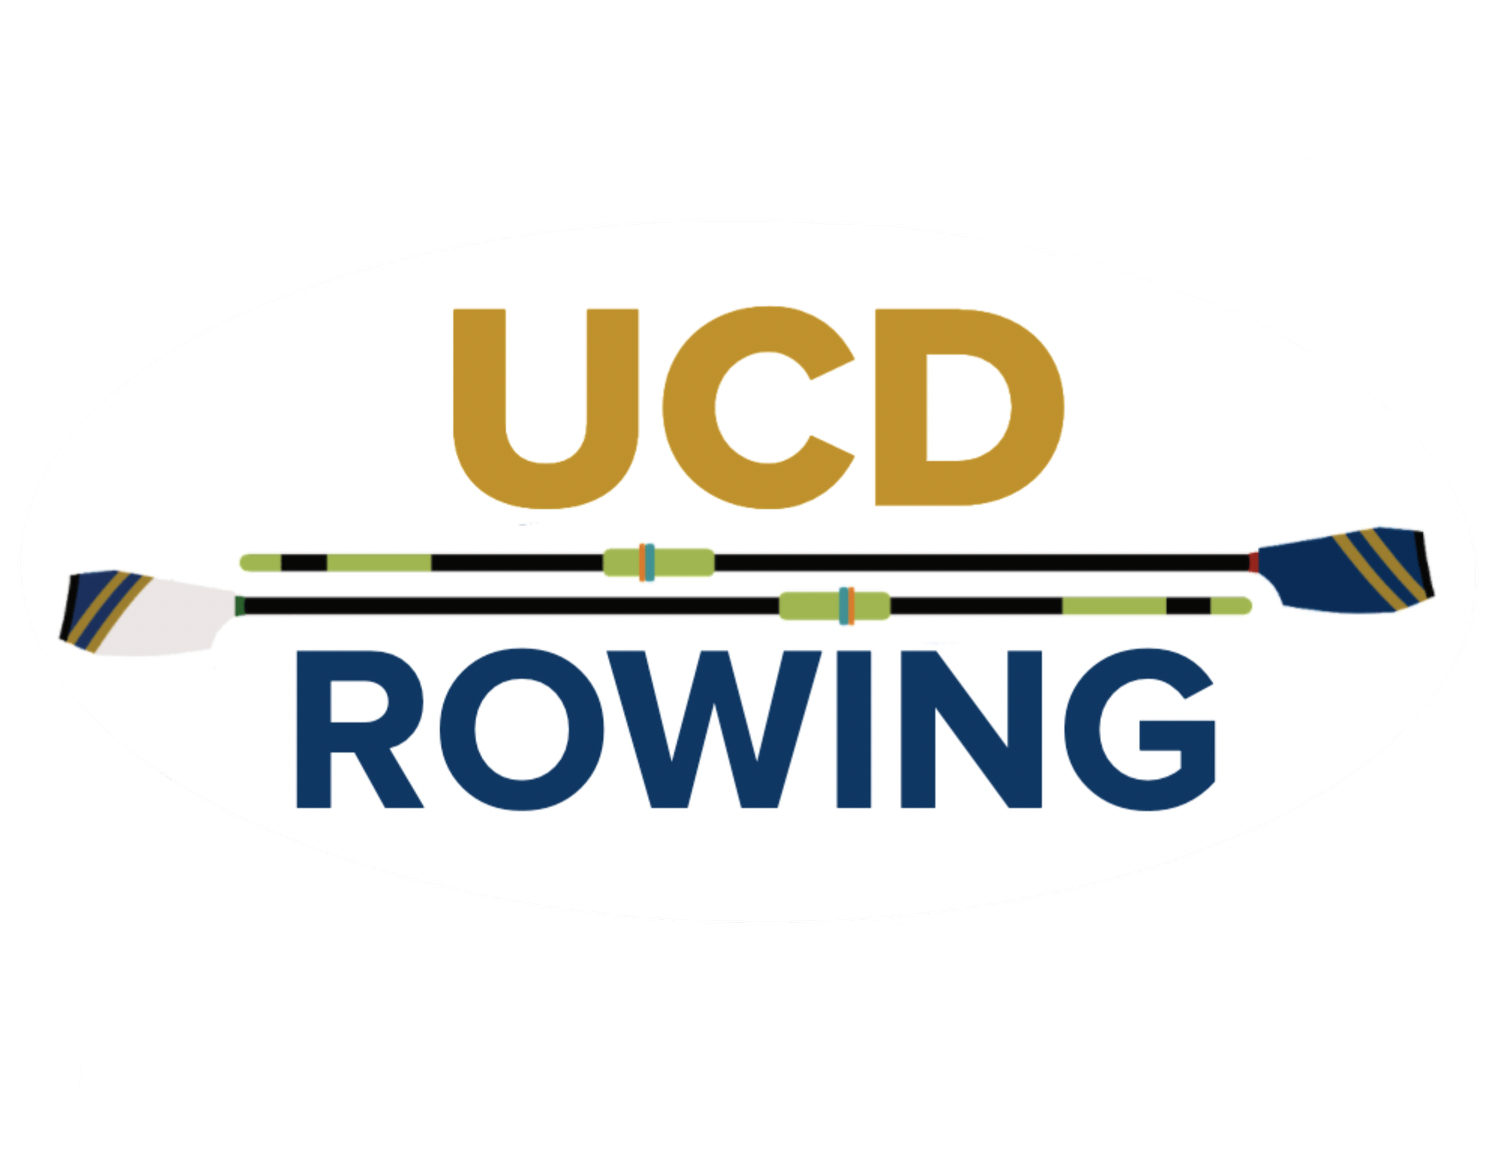 UC Davis Women's Rowing